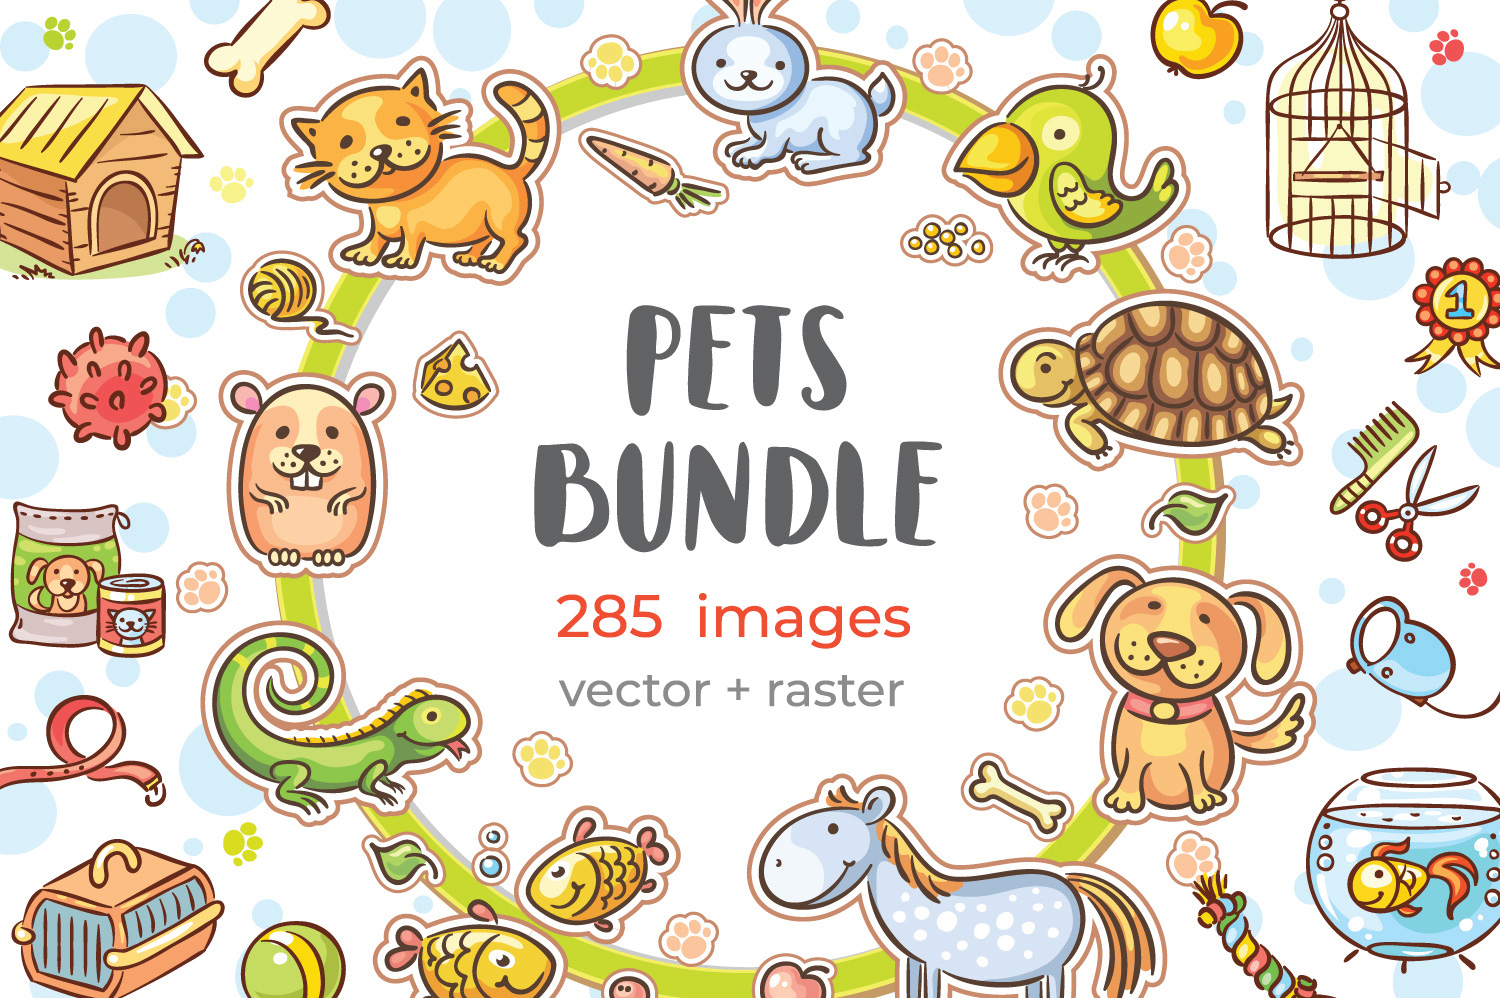 Hand drawn cartoon pets bundle vector illustration clipart set